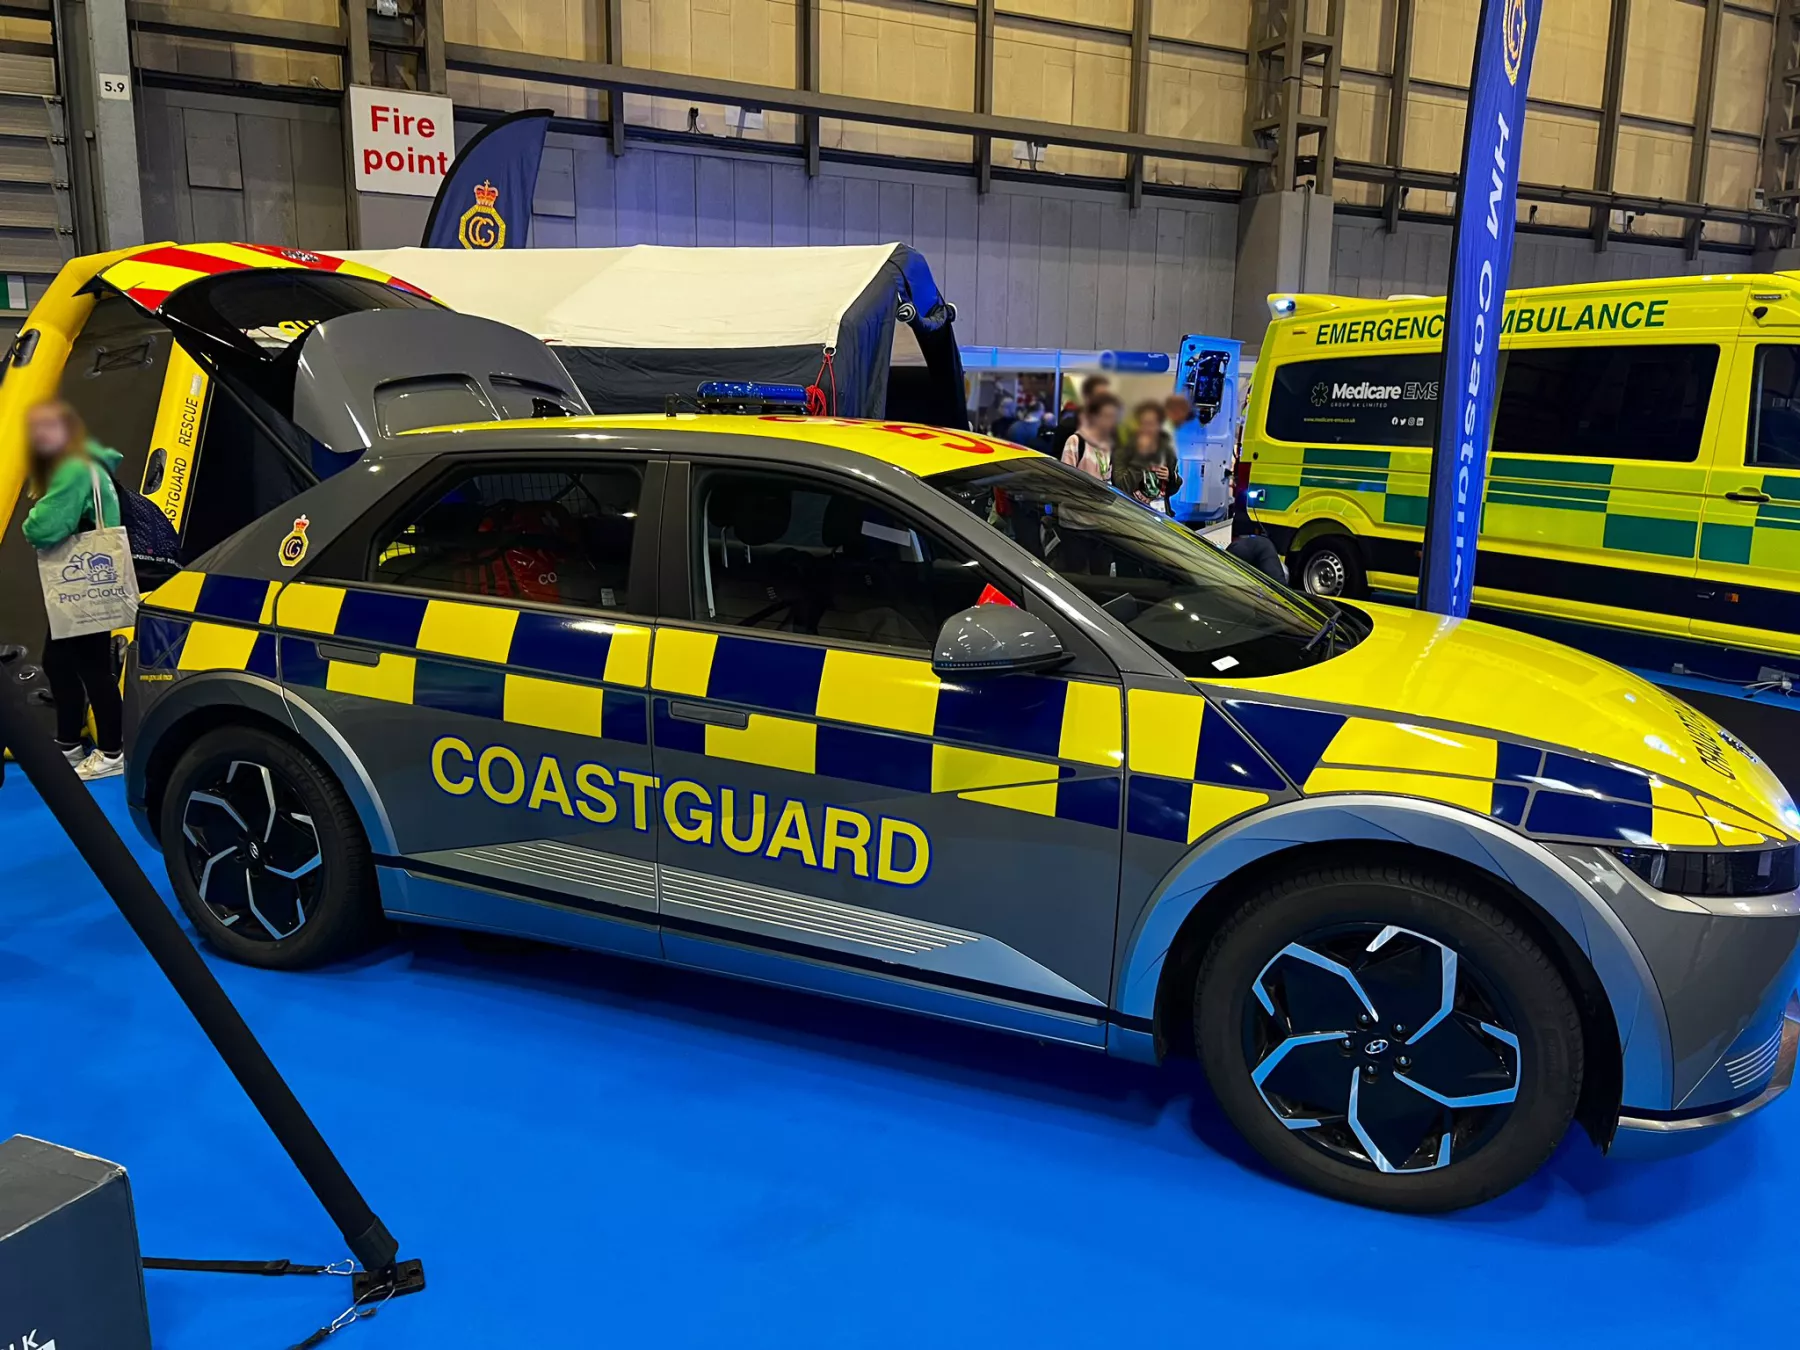 The first fully electric Coastguard emergency response vehicle, a Hyundai Ioniq.